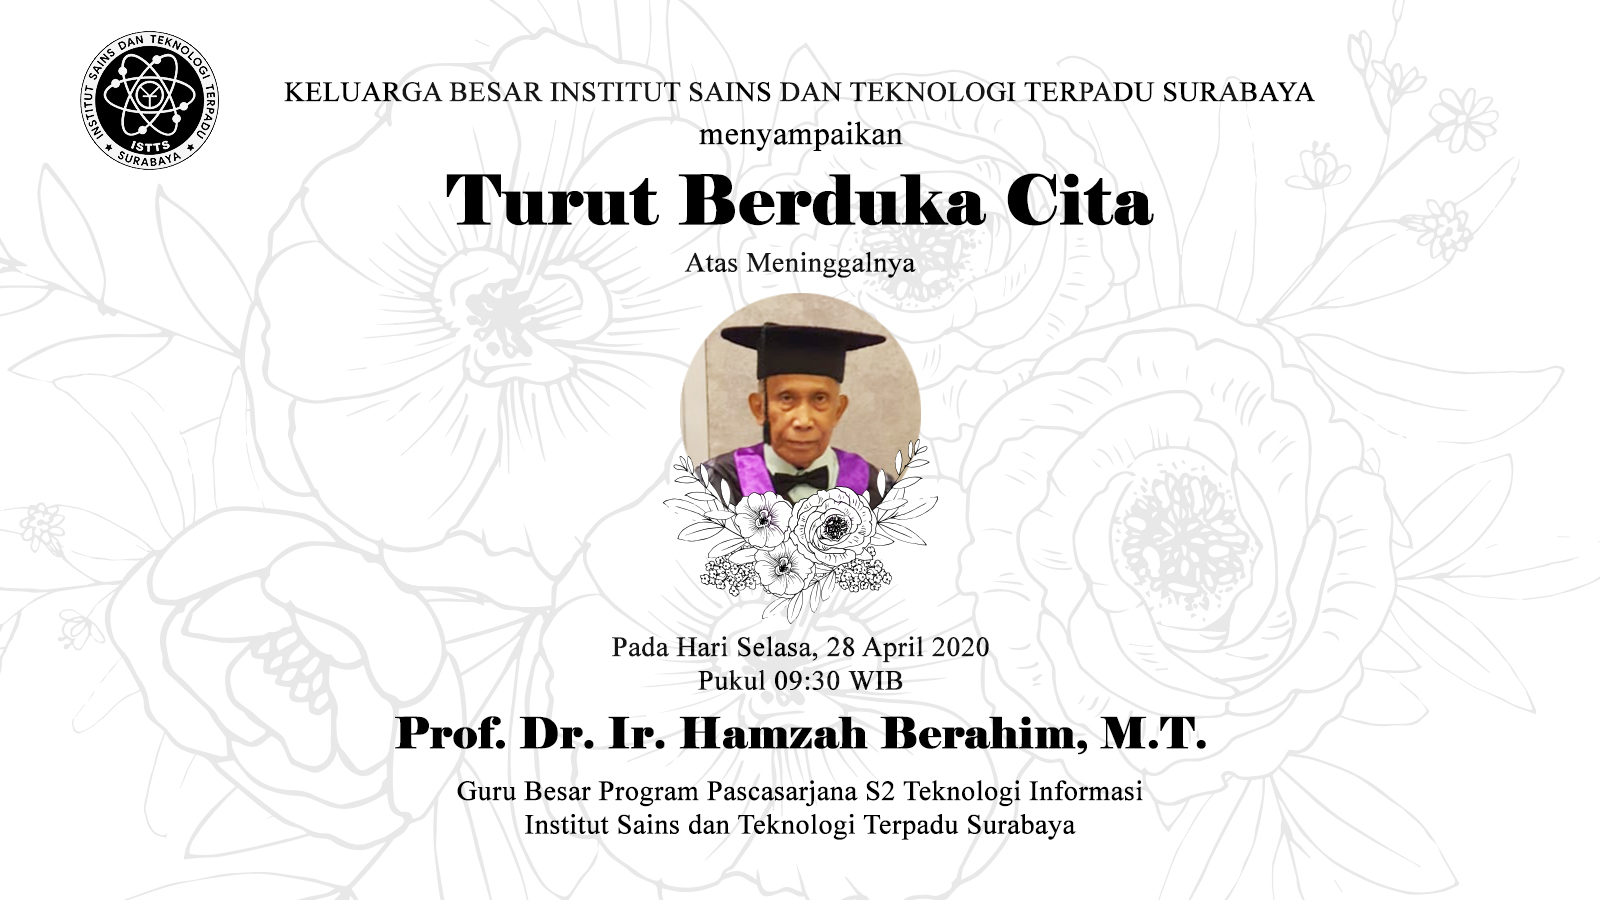 Goodbye Prof. Dr. Ir. Hamzah Berahim, M.T.